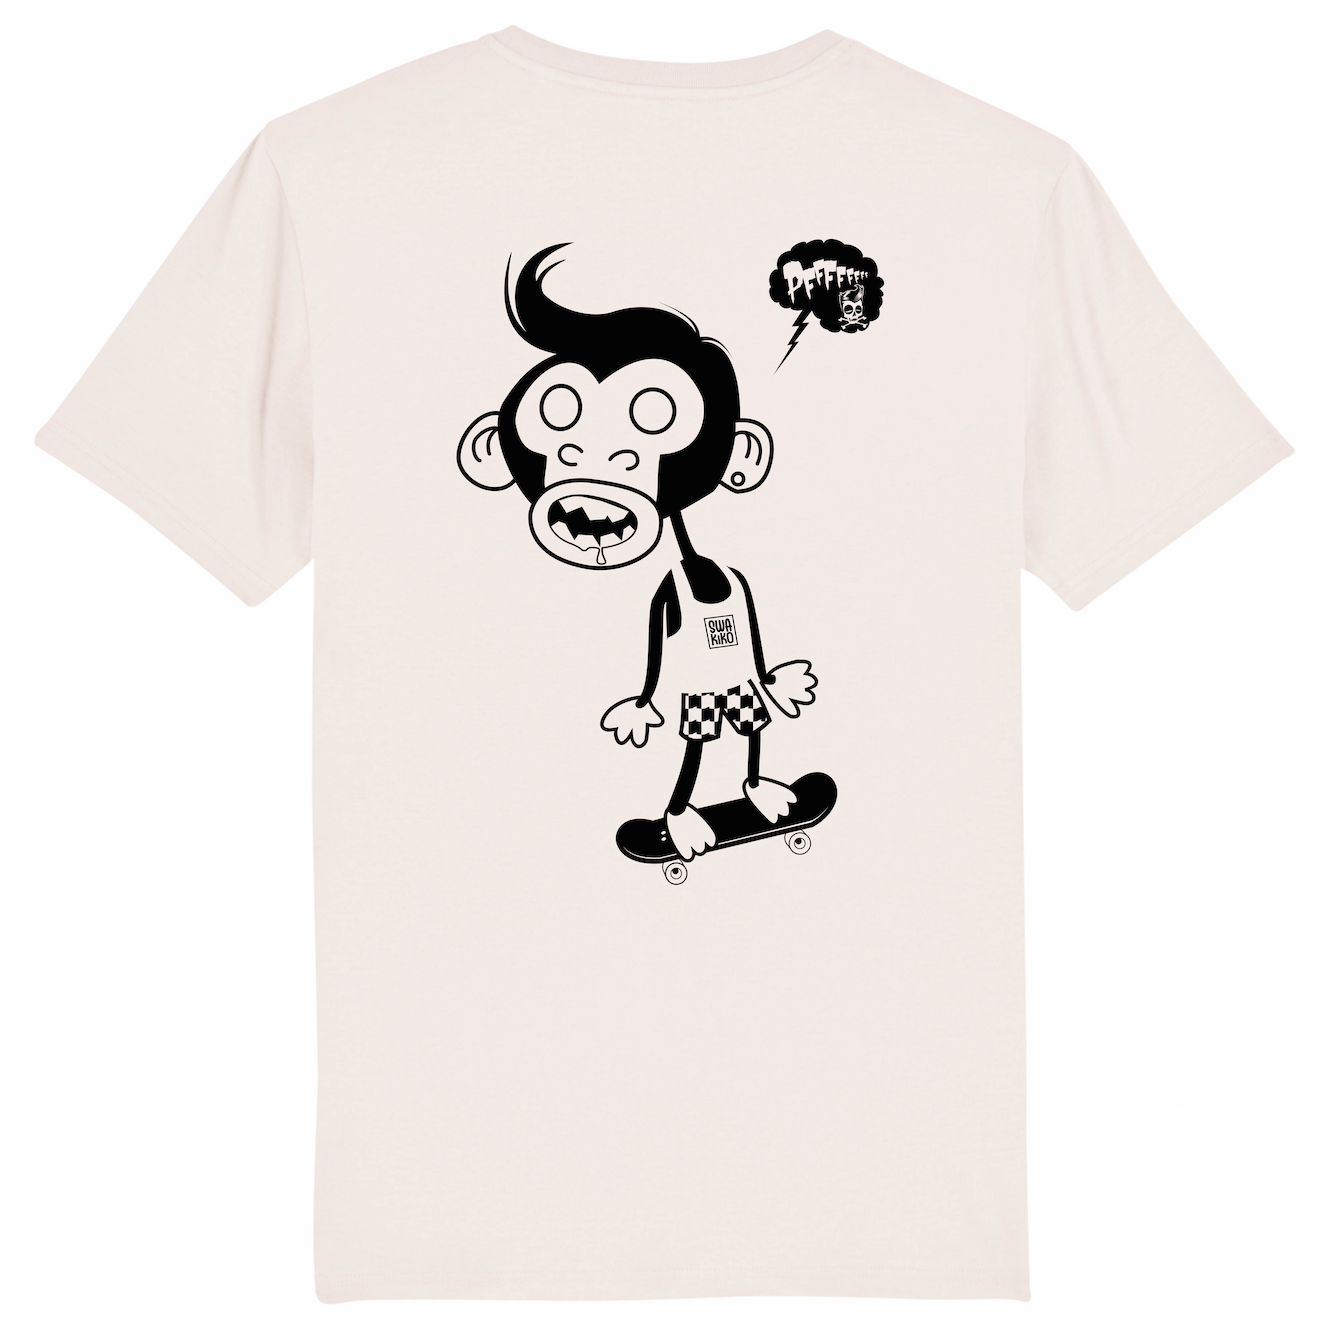 Skate T-shirt Monkey, vintage white men